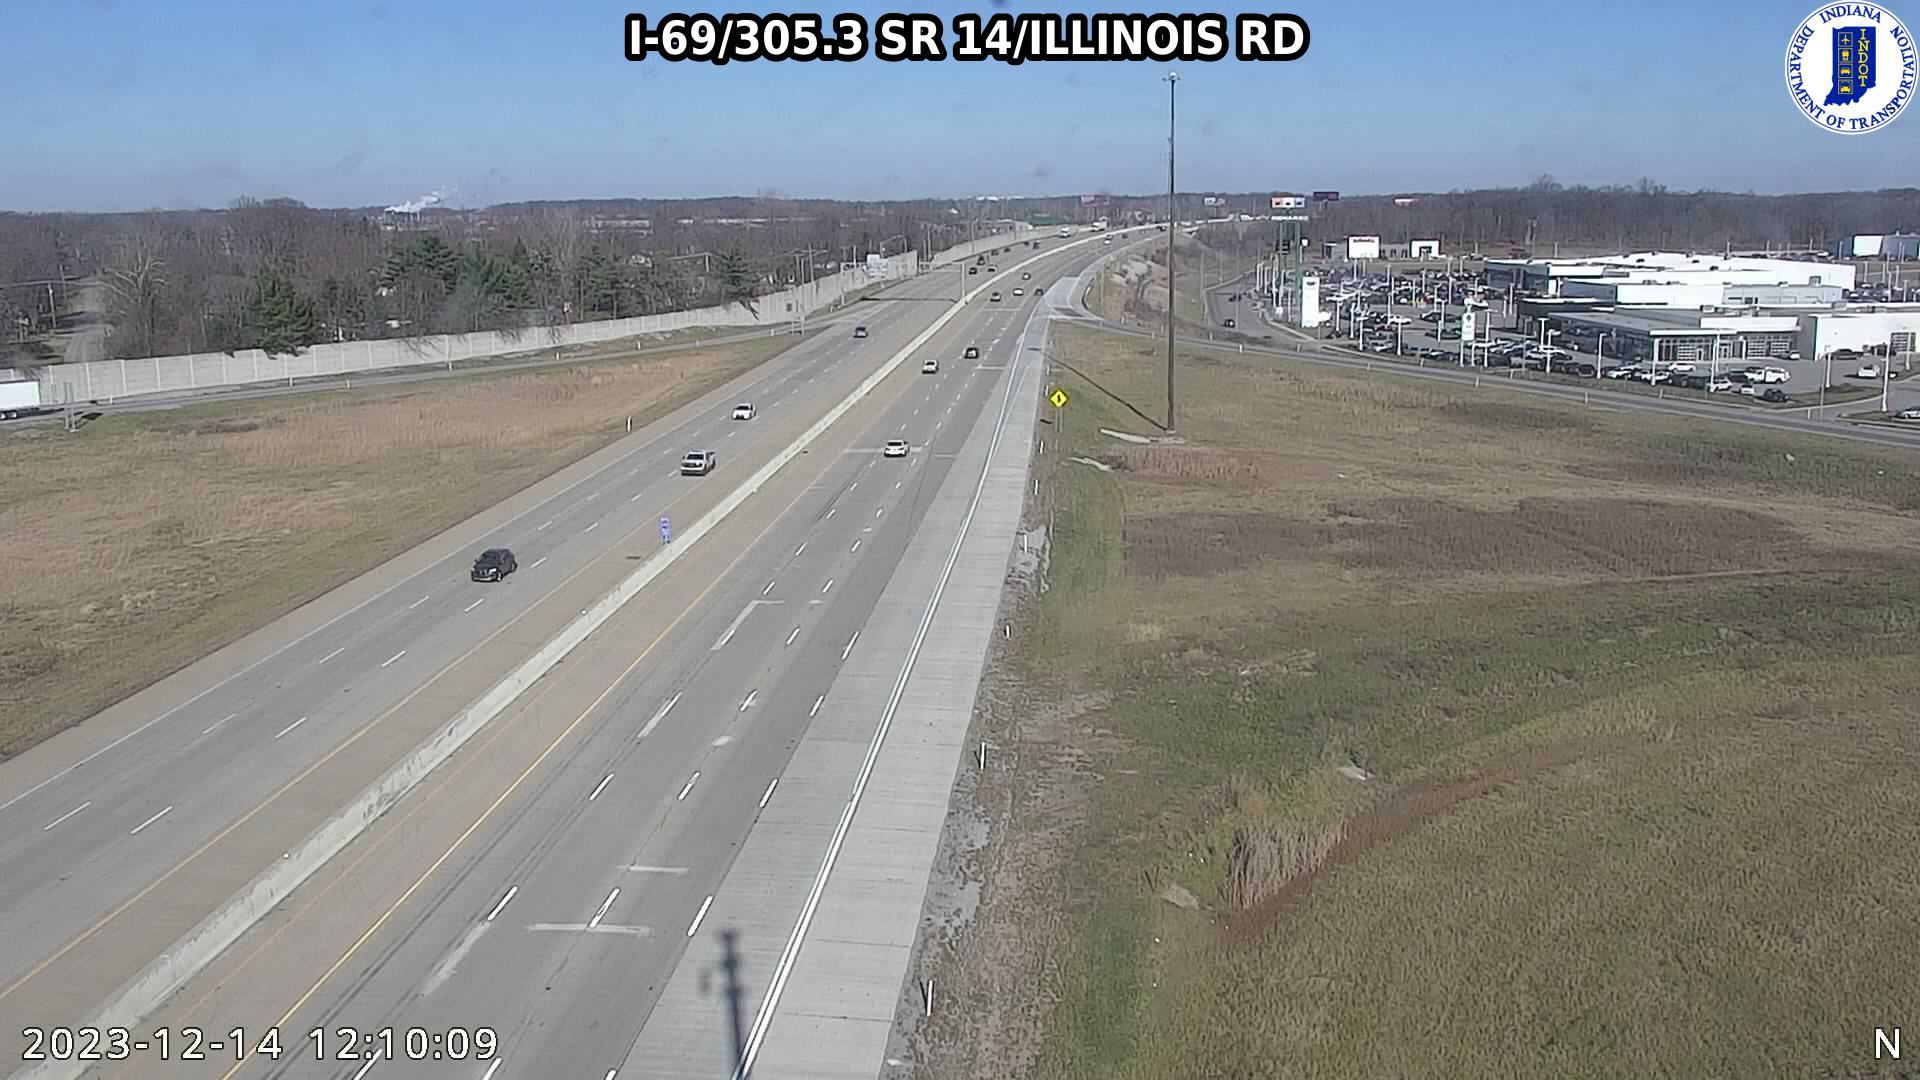 Traffic Cam Fort Wayne: I-69: I-69/305.3 SR 14/ILLINOIS RD Player